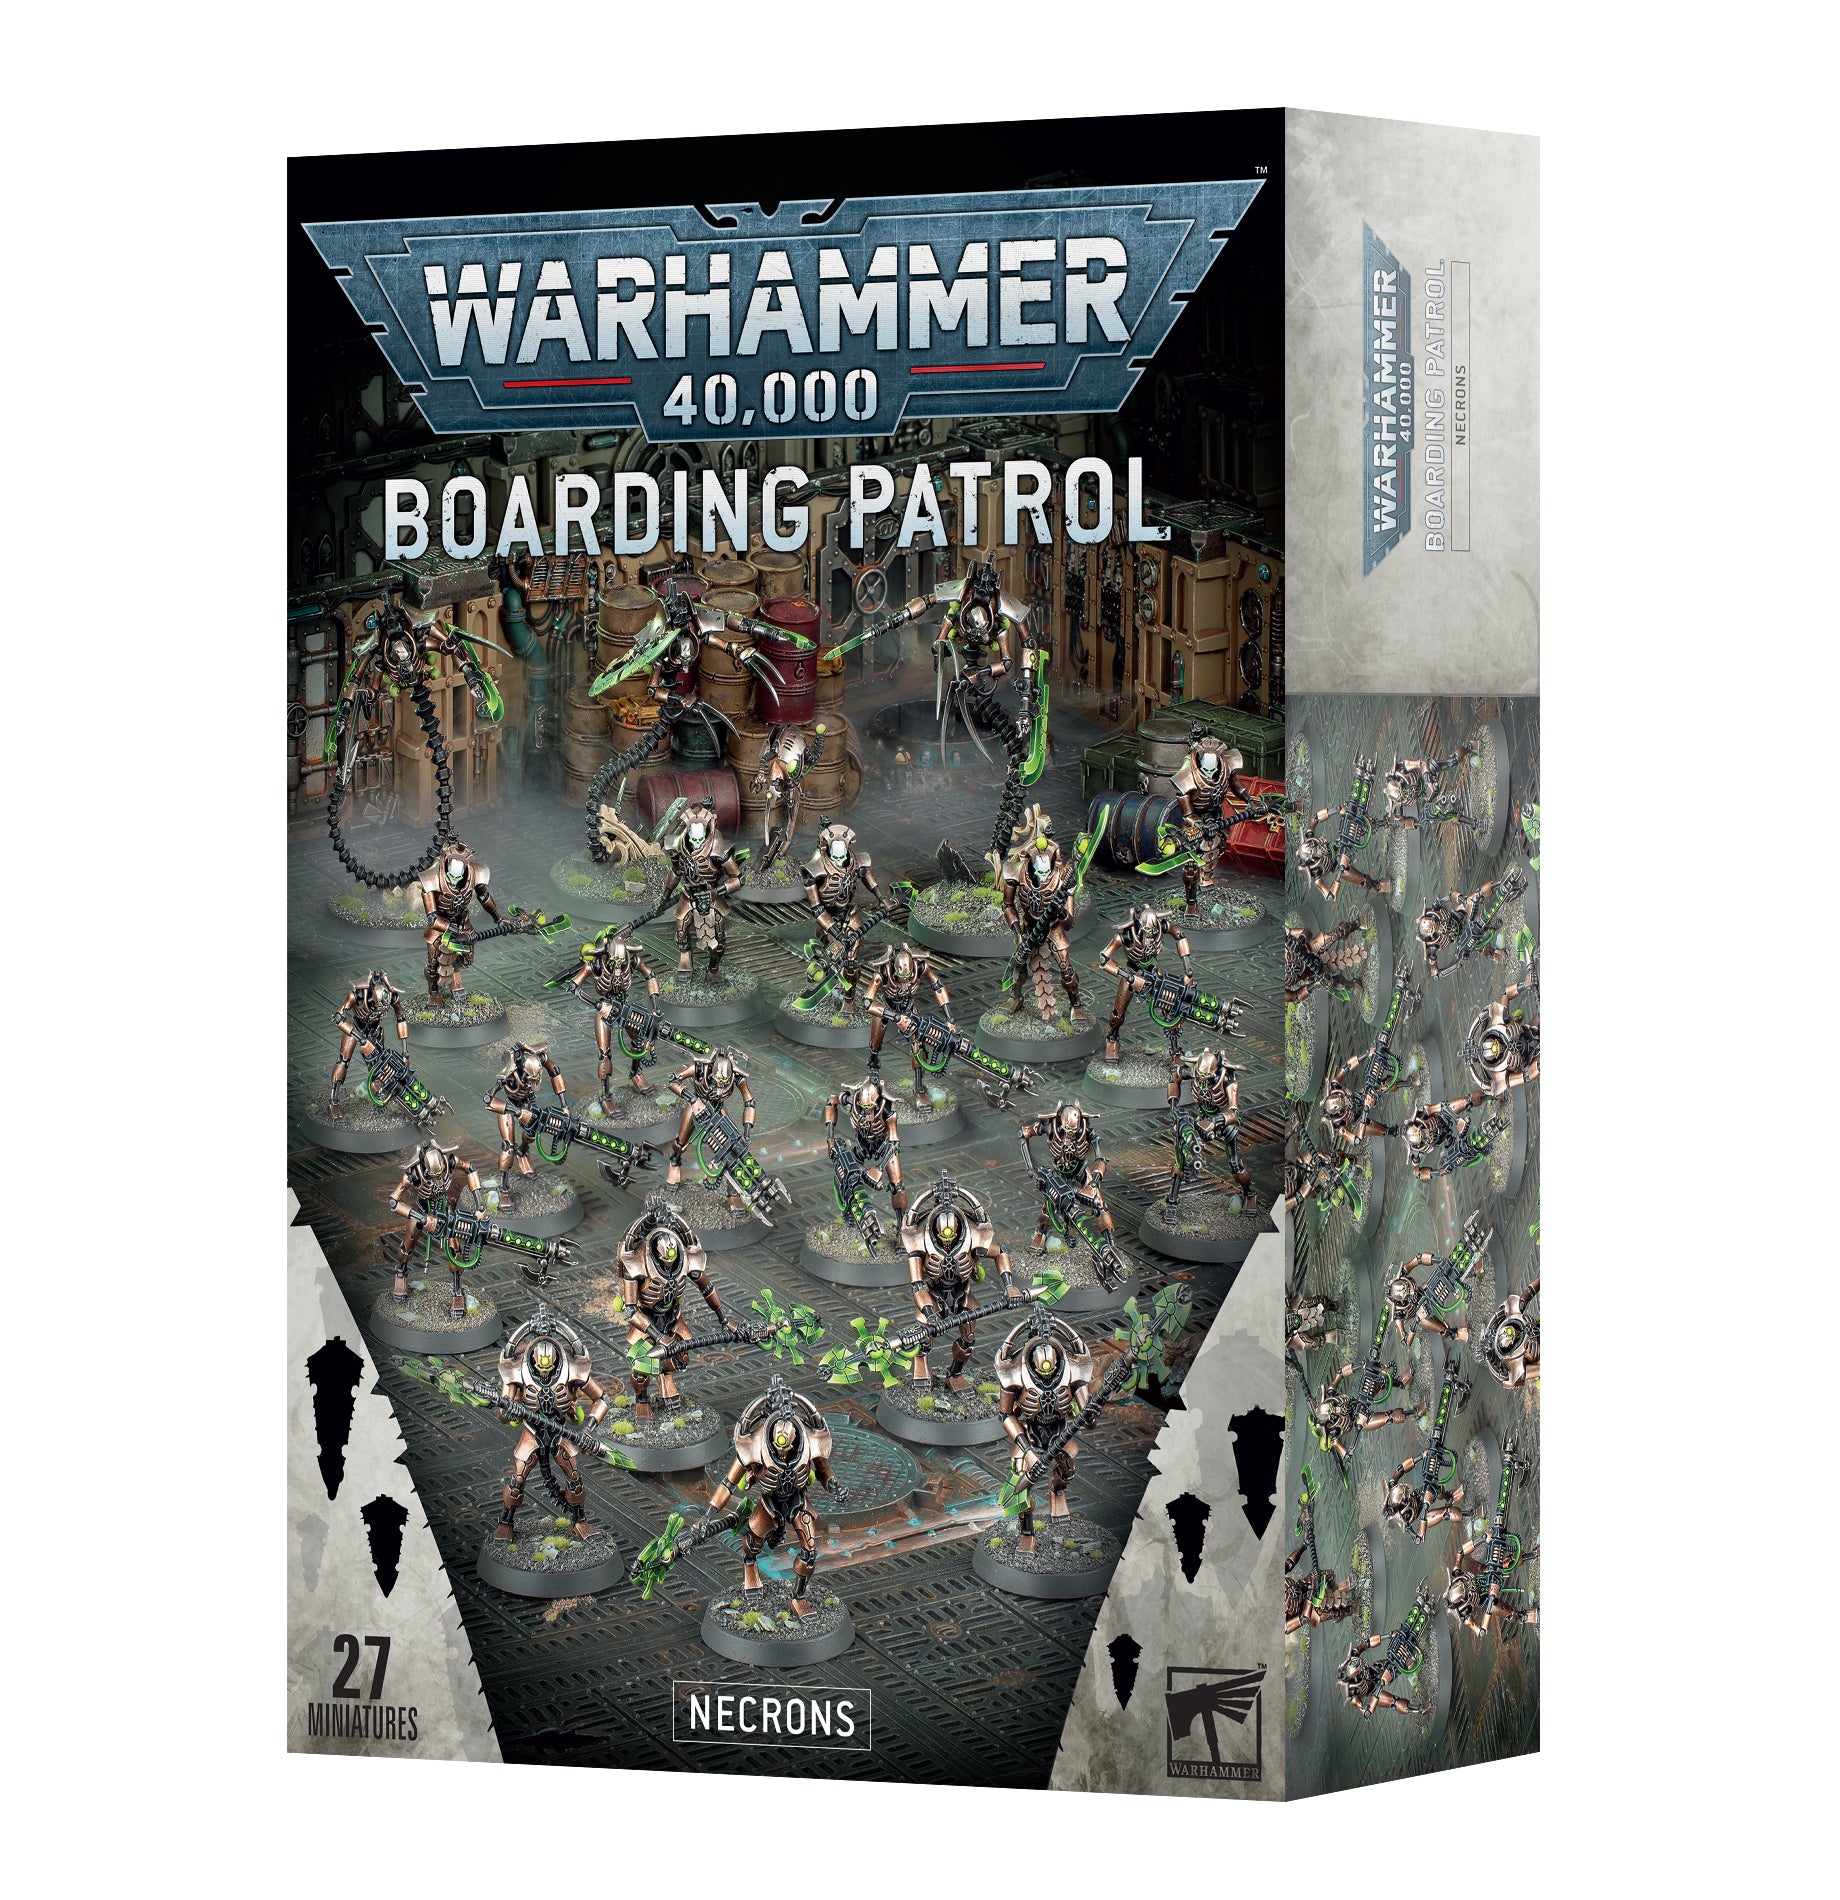 Warhammer 40k - Boarding Patrol: Necrons - Bards & Cards